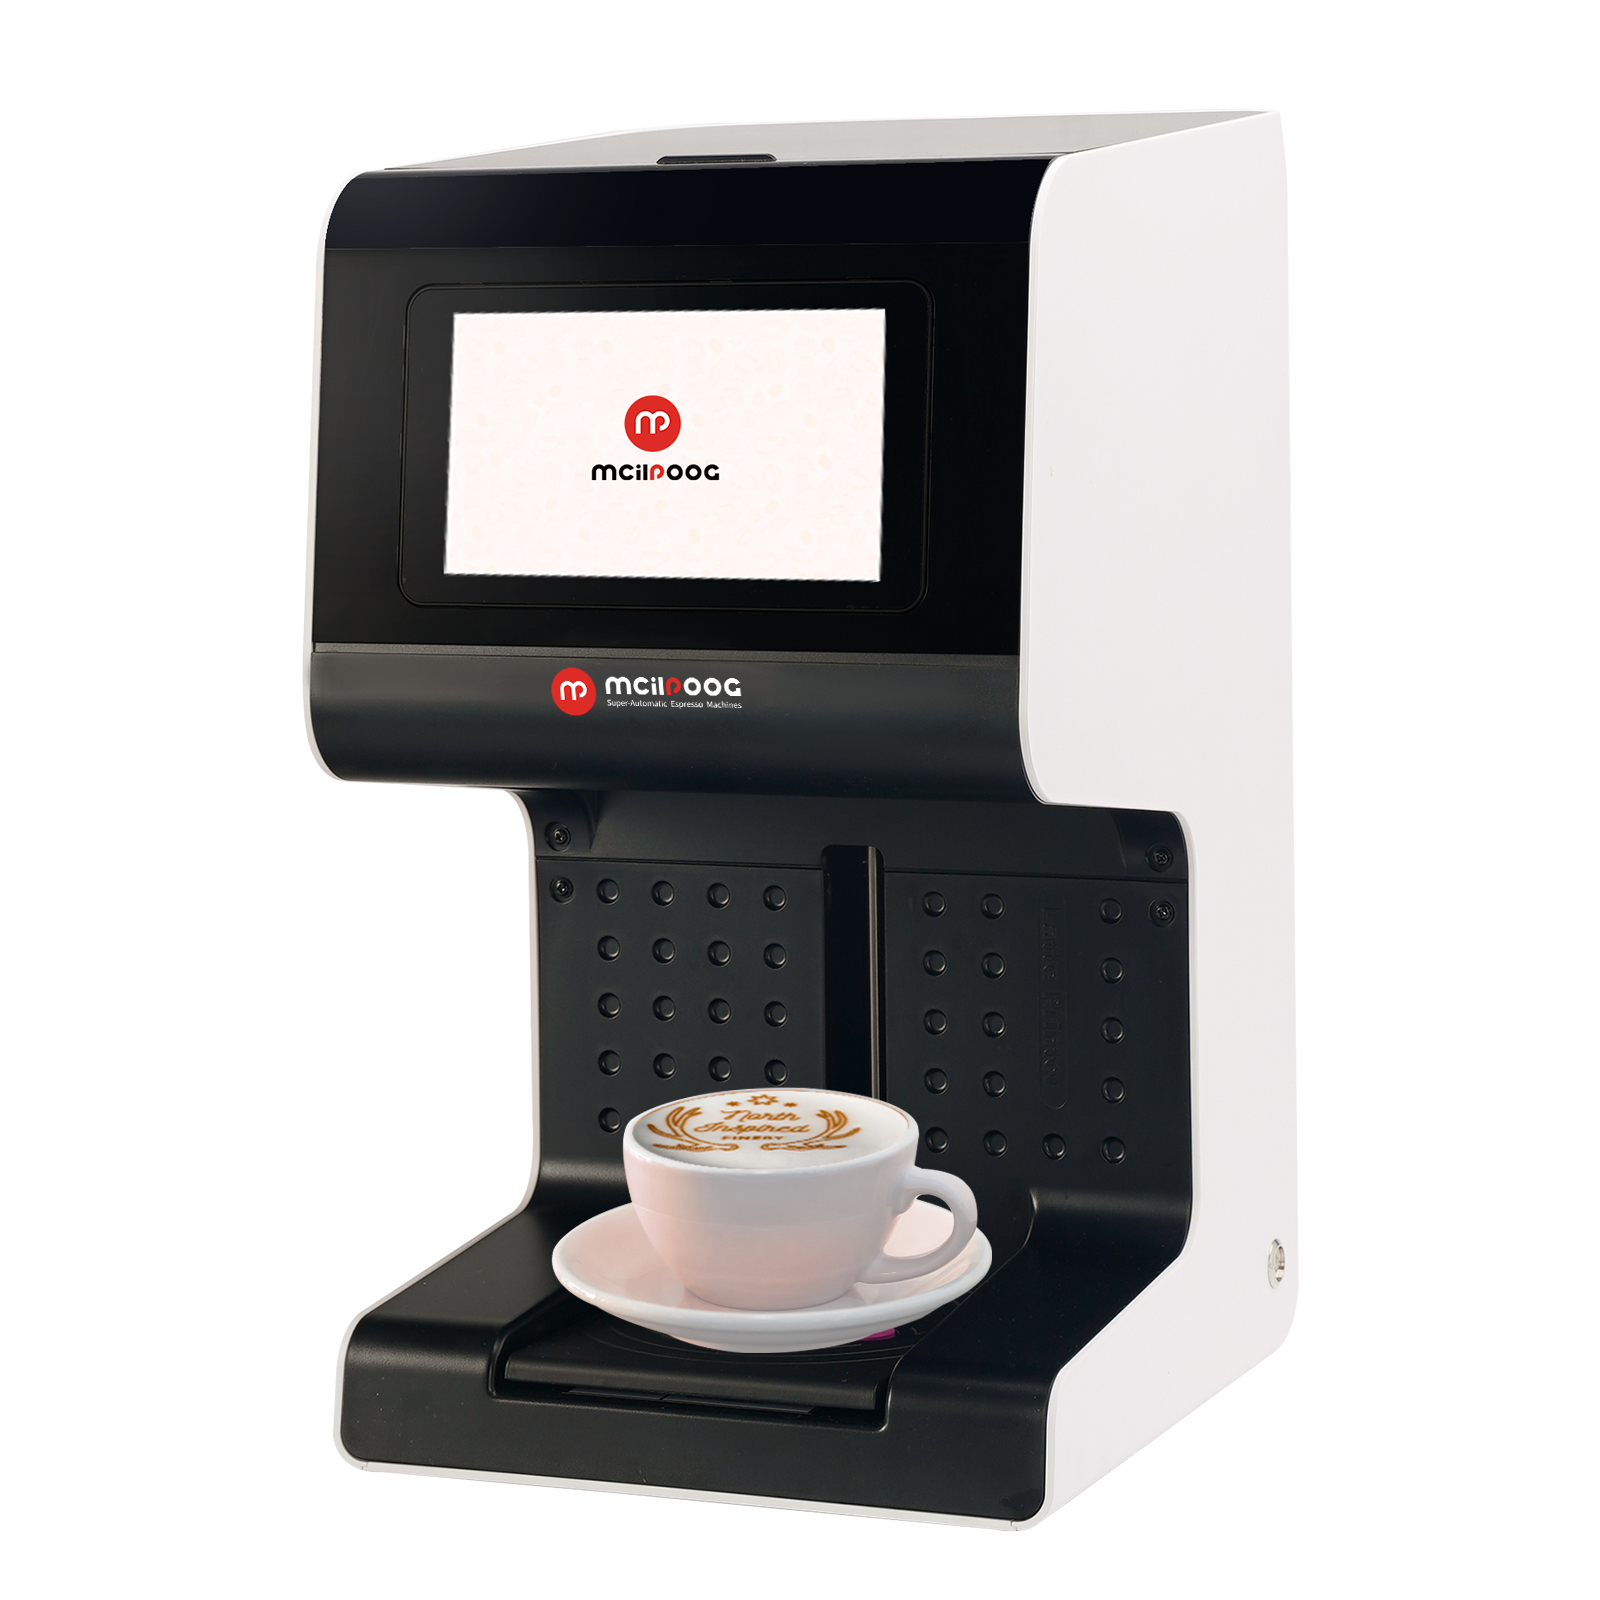 Mcilpoog WS-V2 3D Latte Art Coffee Printer Machine Digital Inkjet WiFi Photo Printing Machine DIY